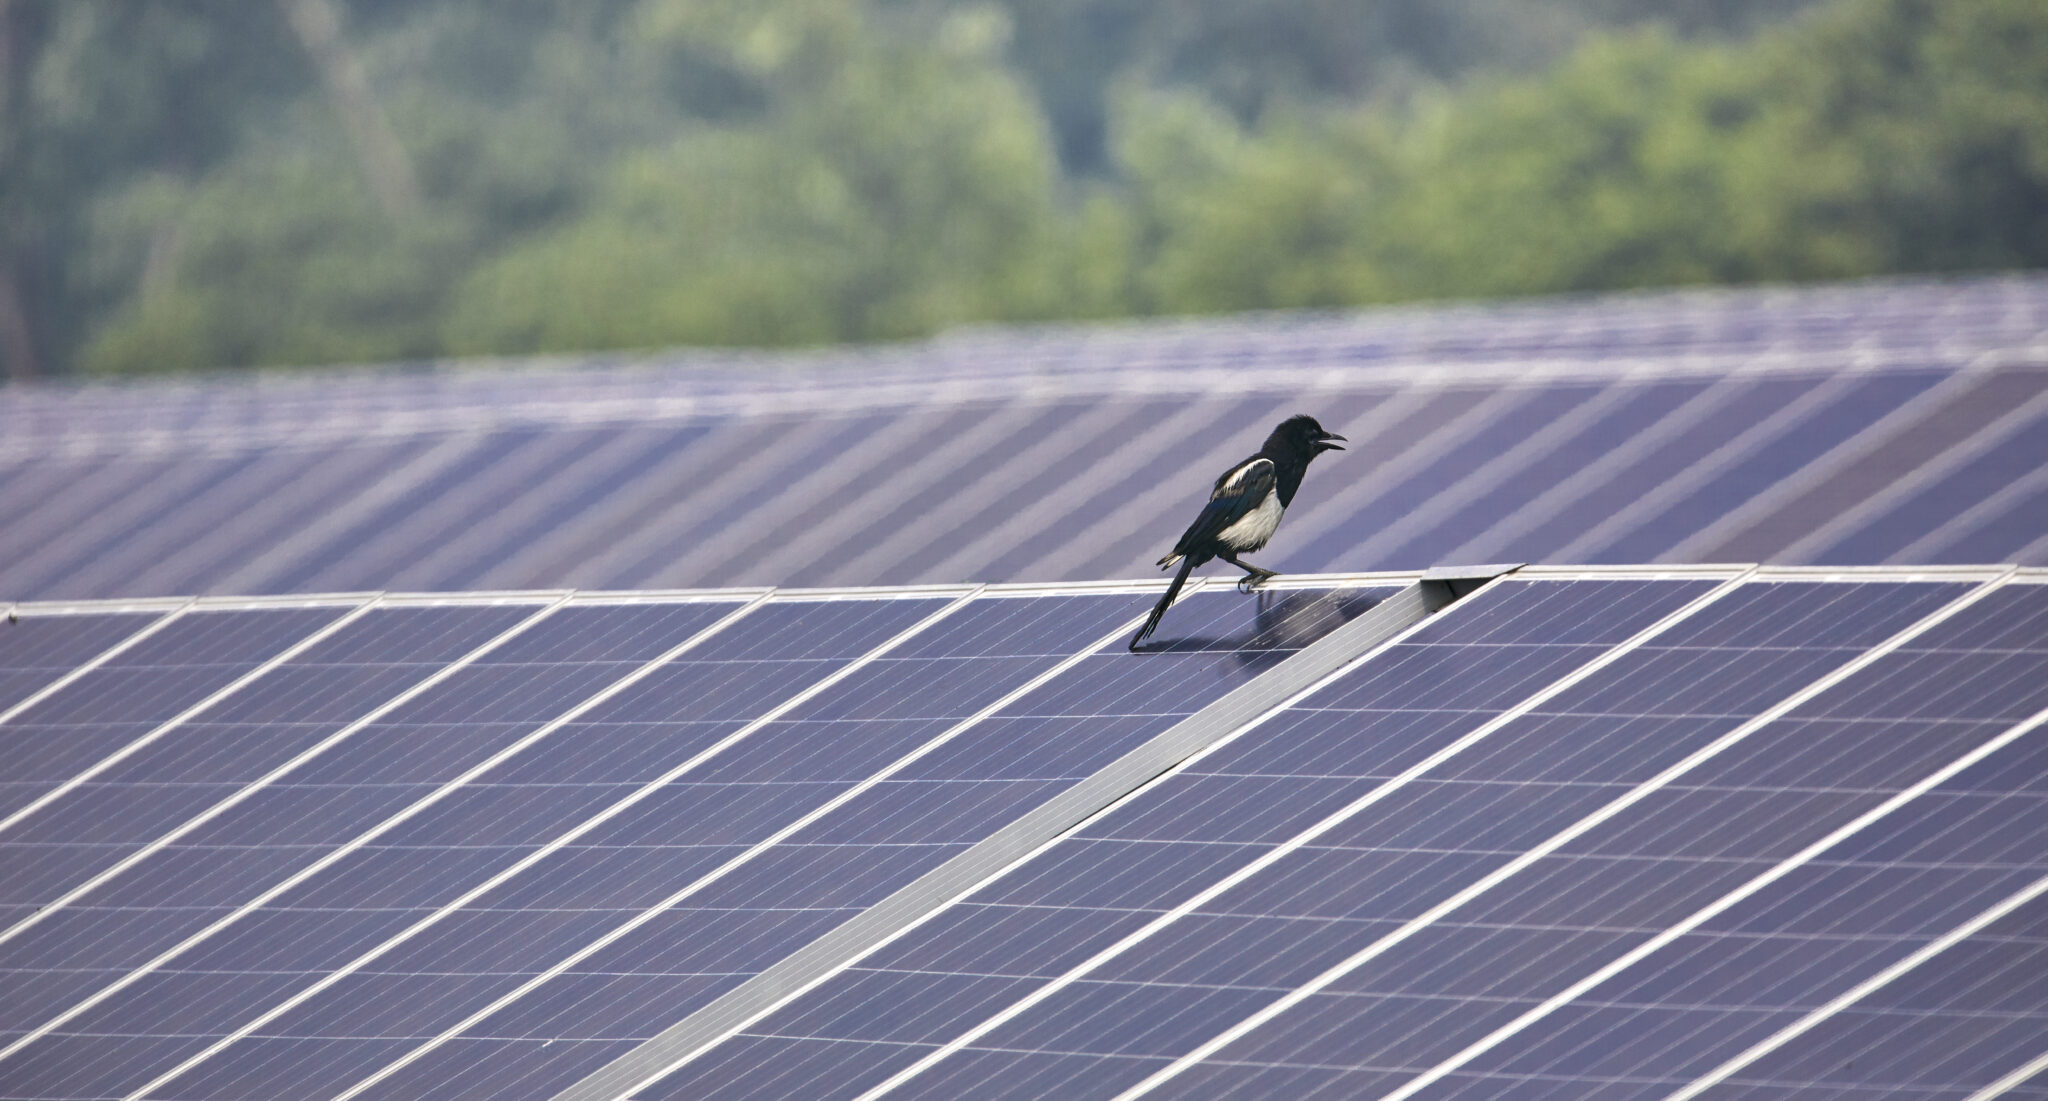 Bird sitting on solar panels in Sydney business